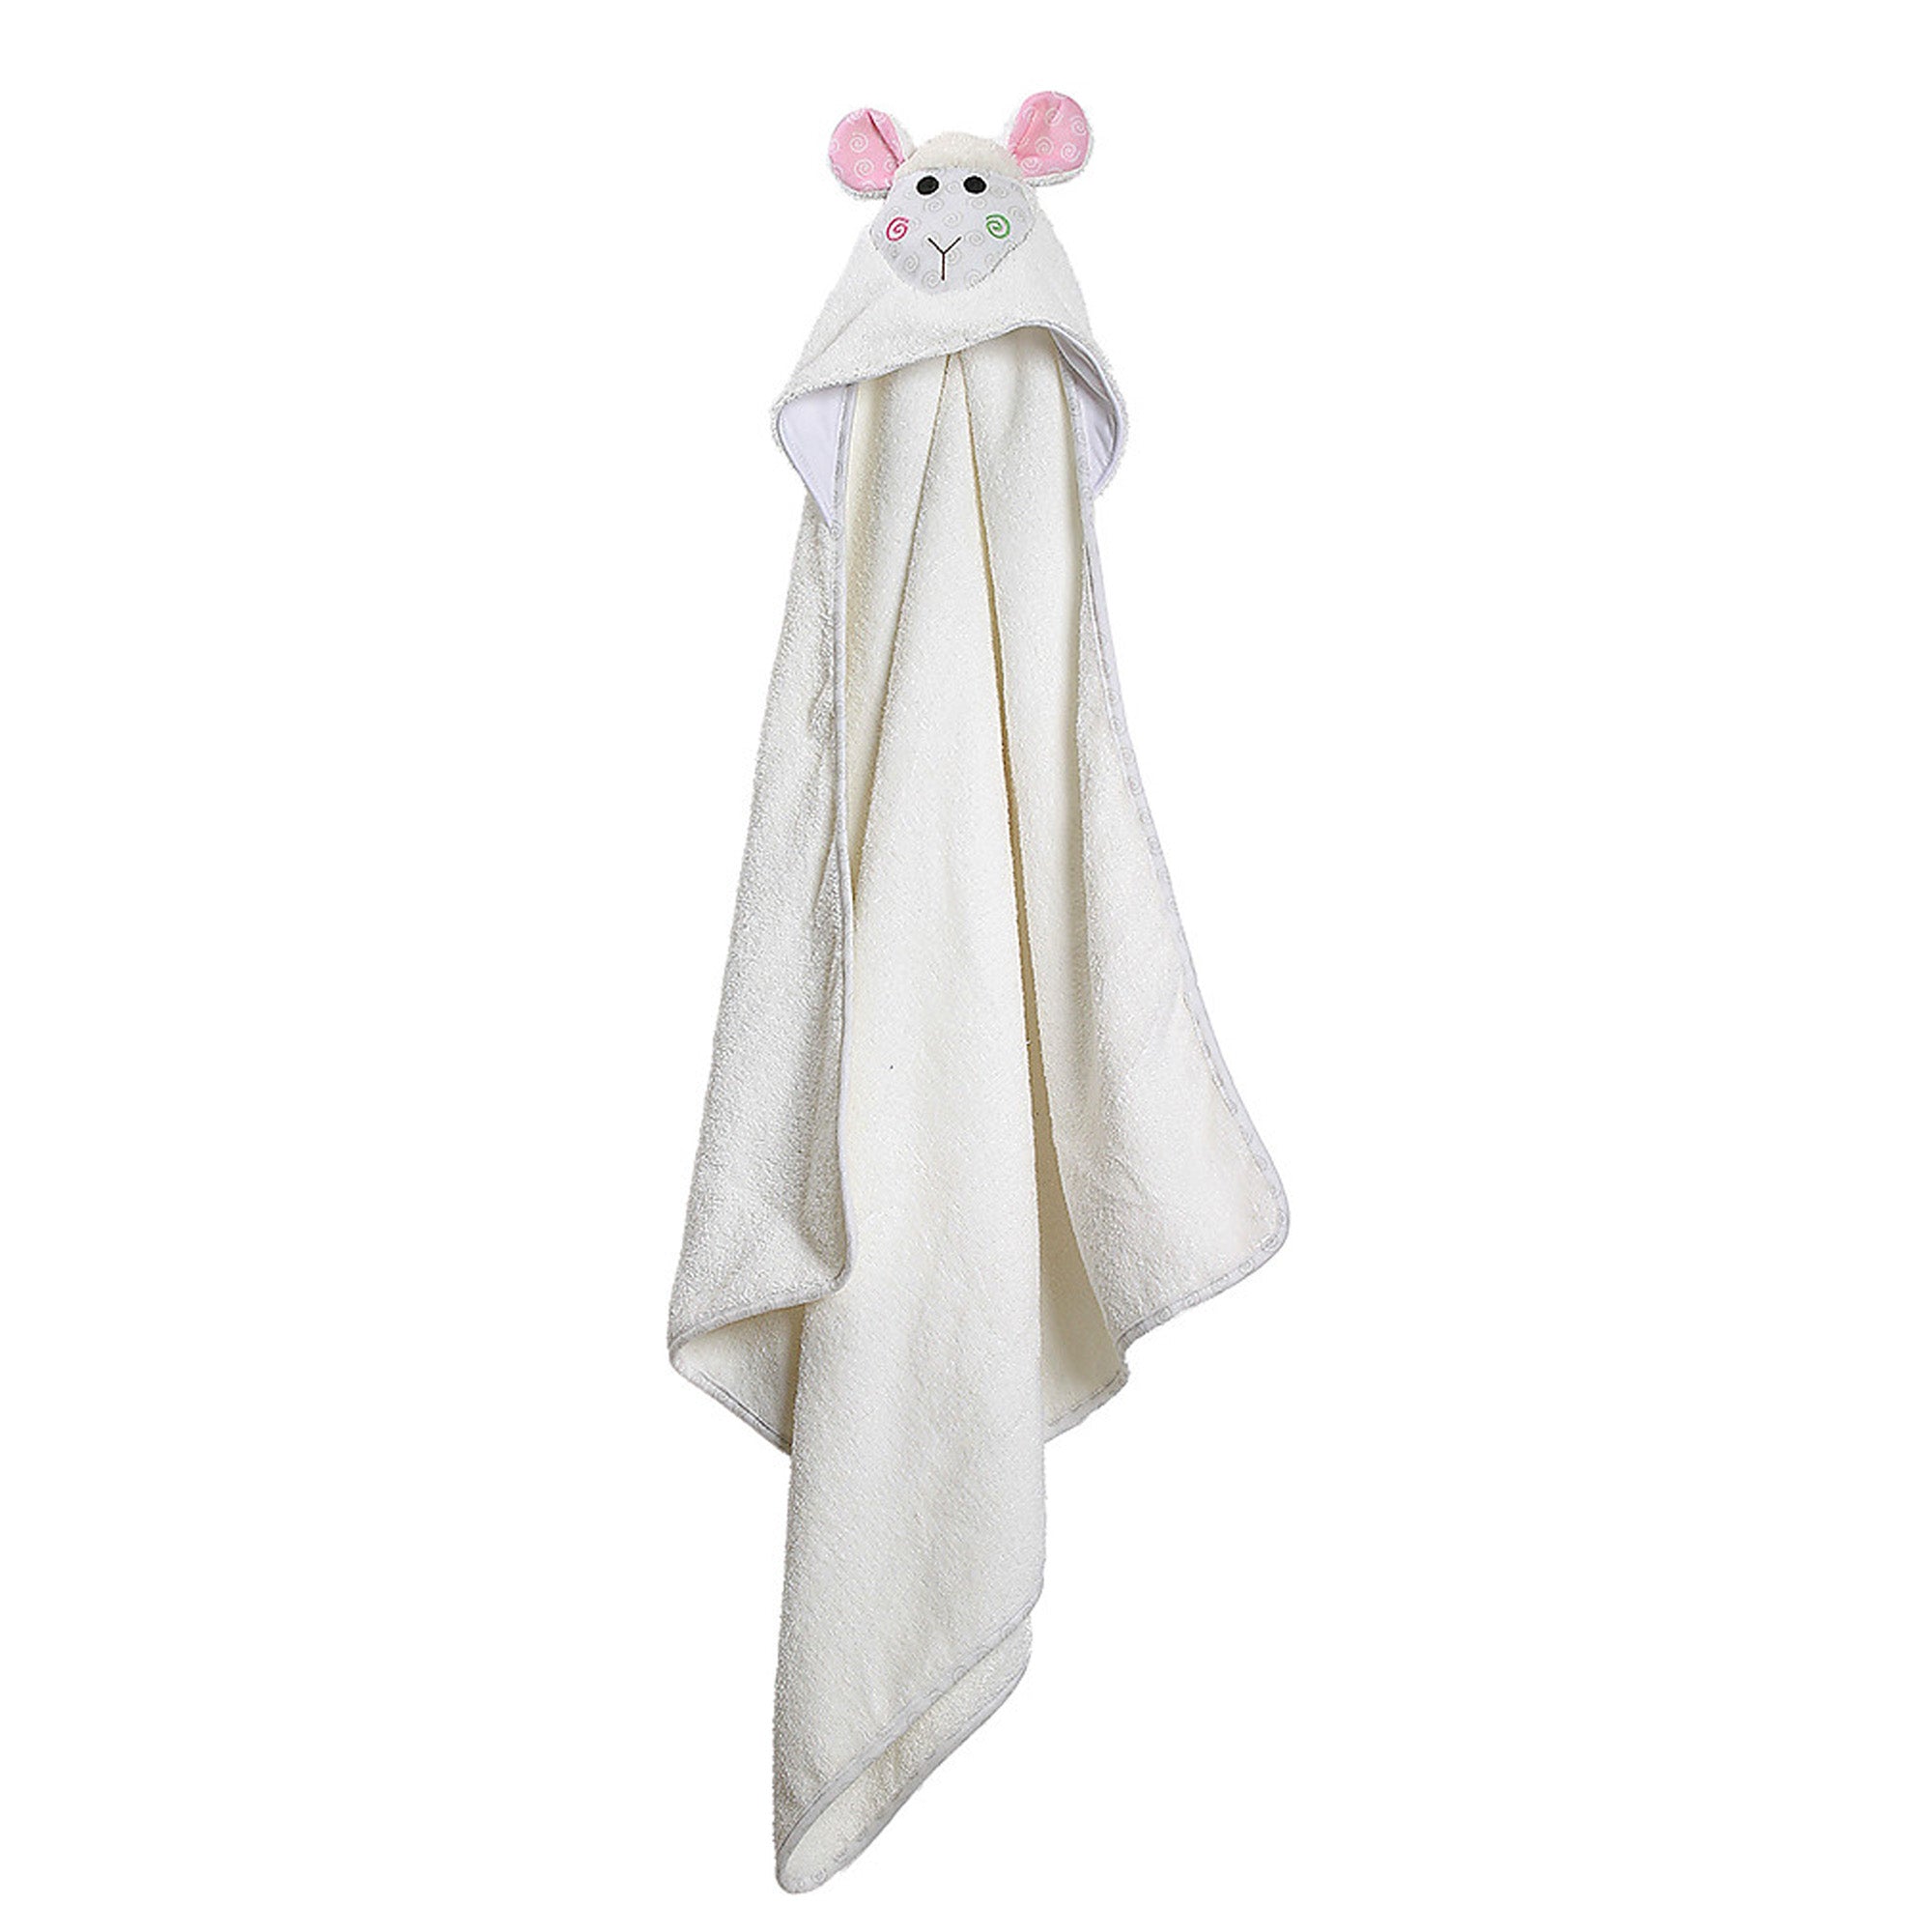 Baby Plush Terry Hooded Bath Towel - Lola the Lamb